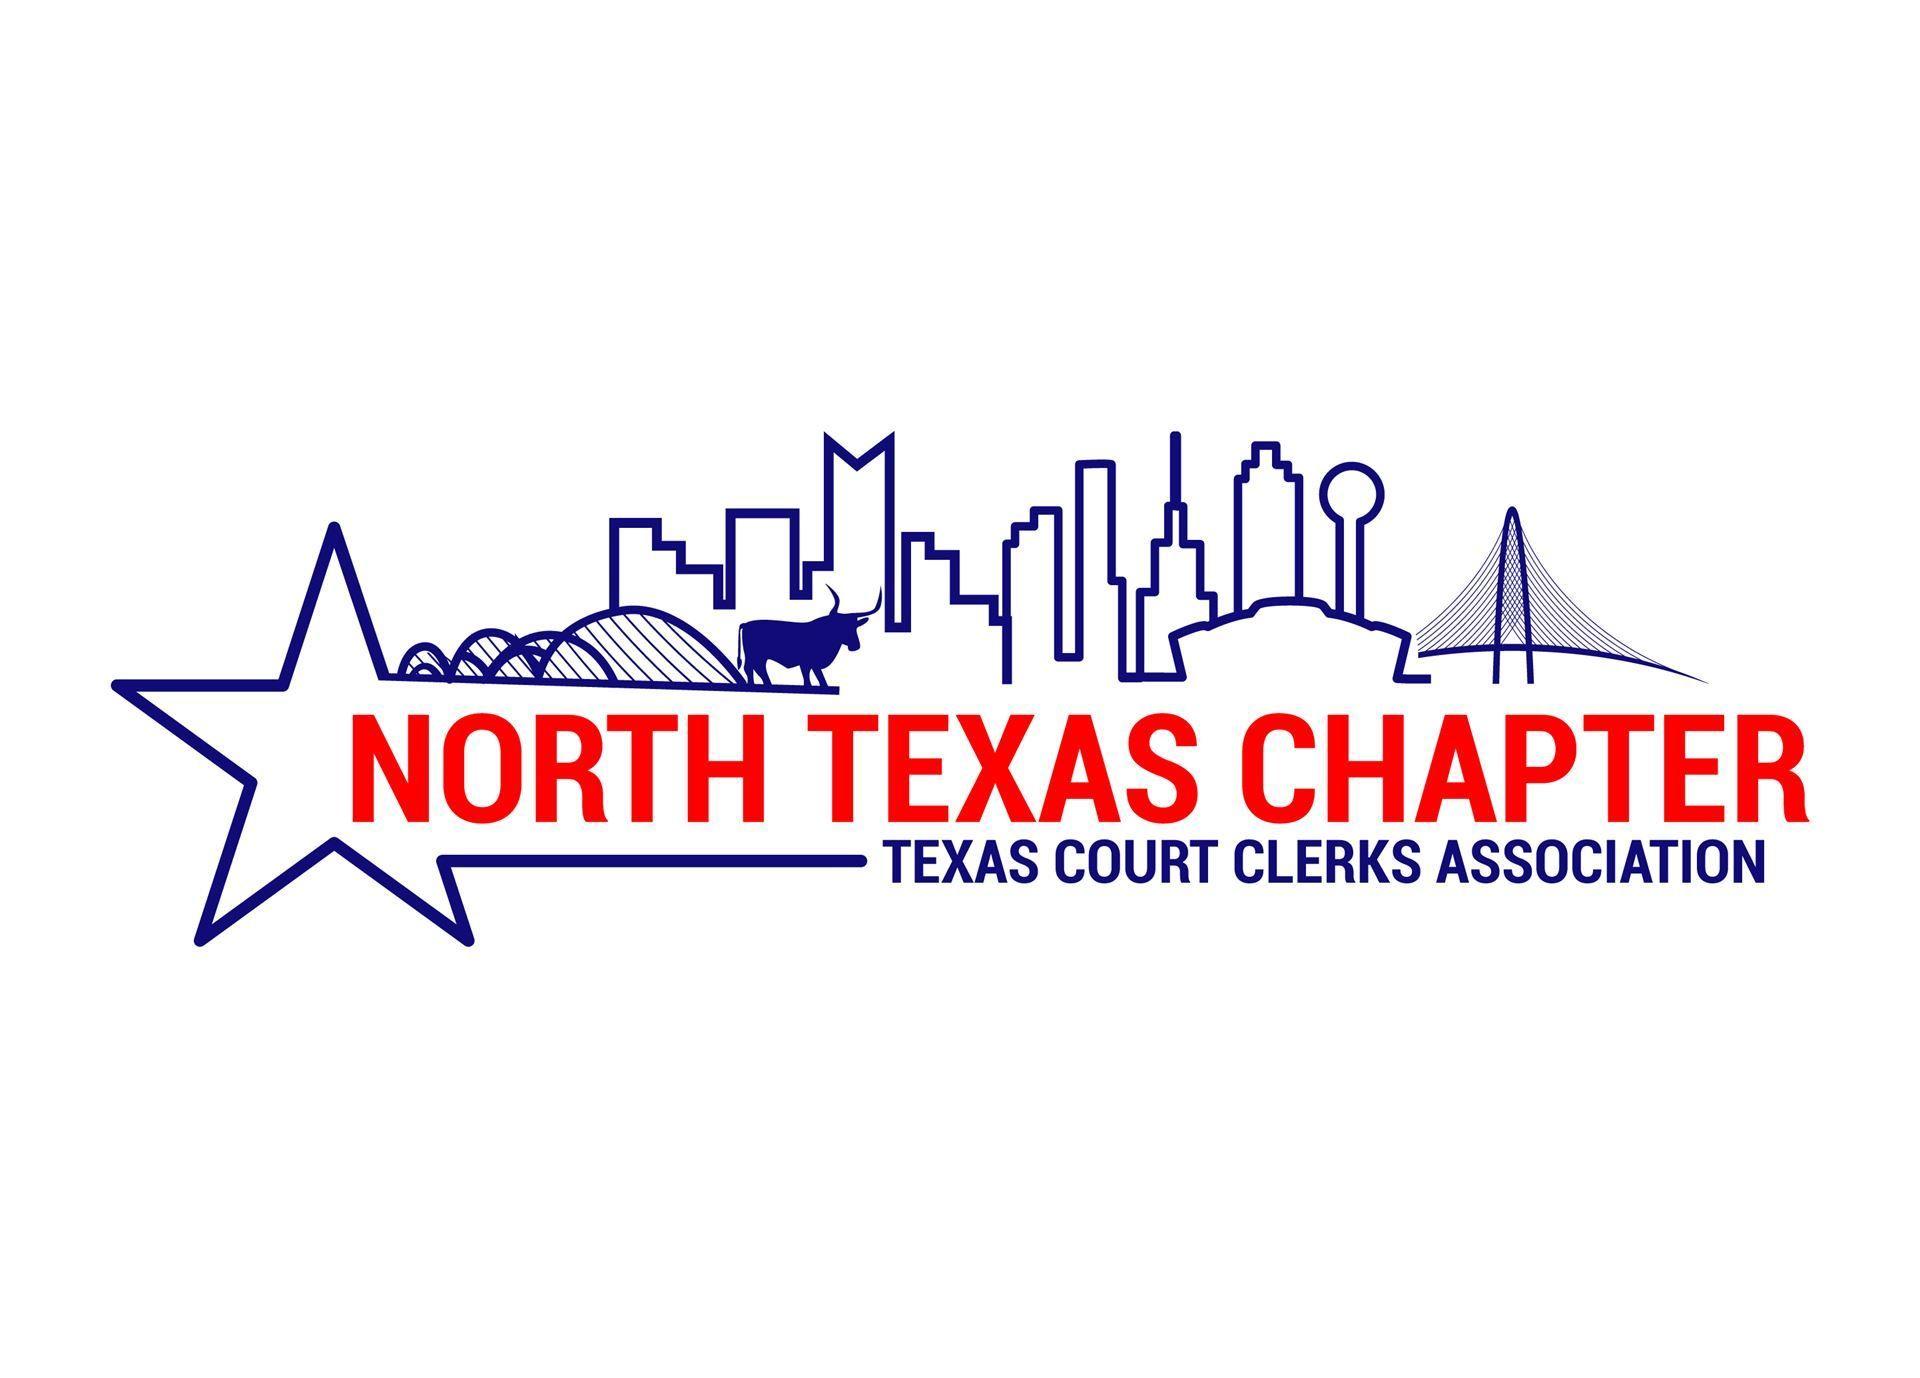 TCCA Logo - Texas Court Clerks Association